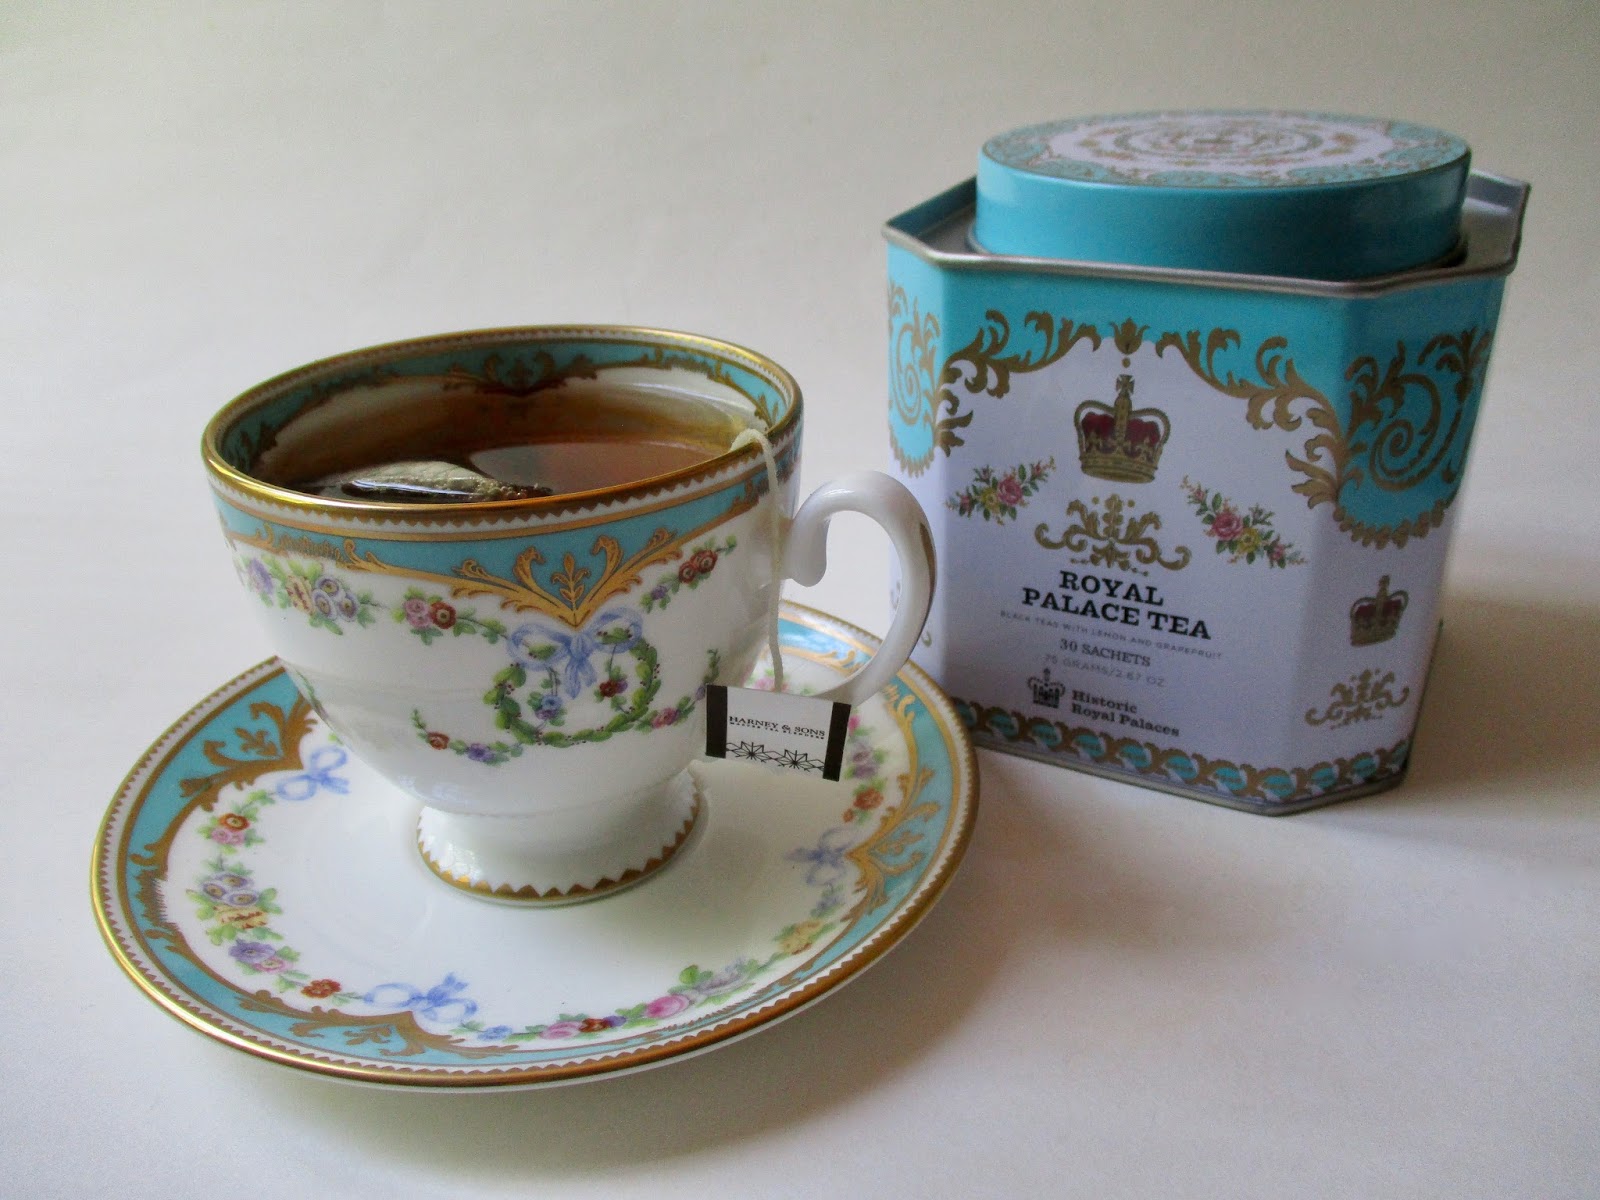  Harney & Sons Historic Royal Palaces Black Tea